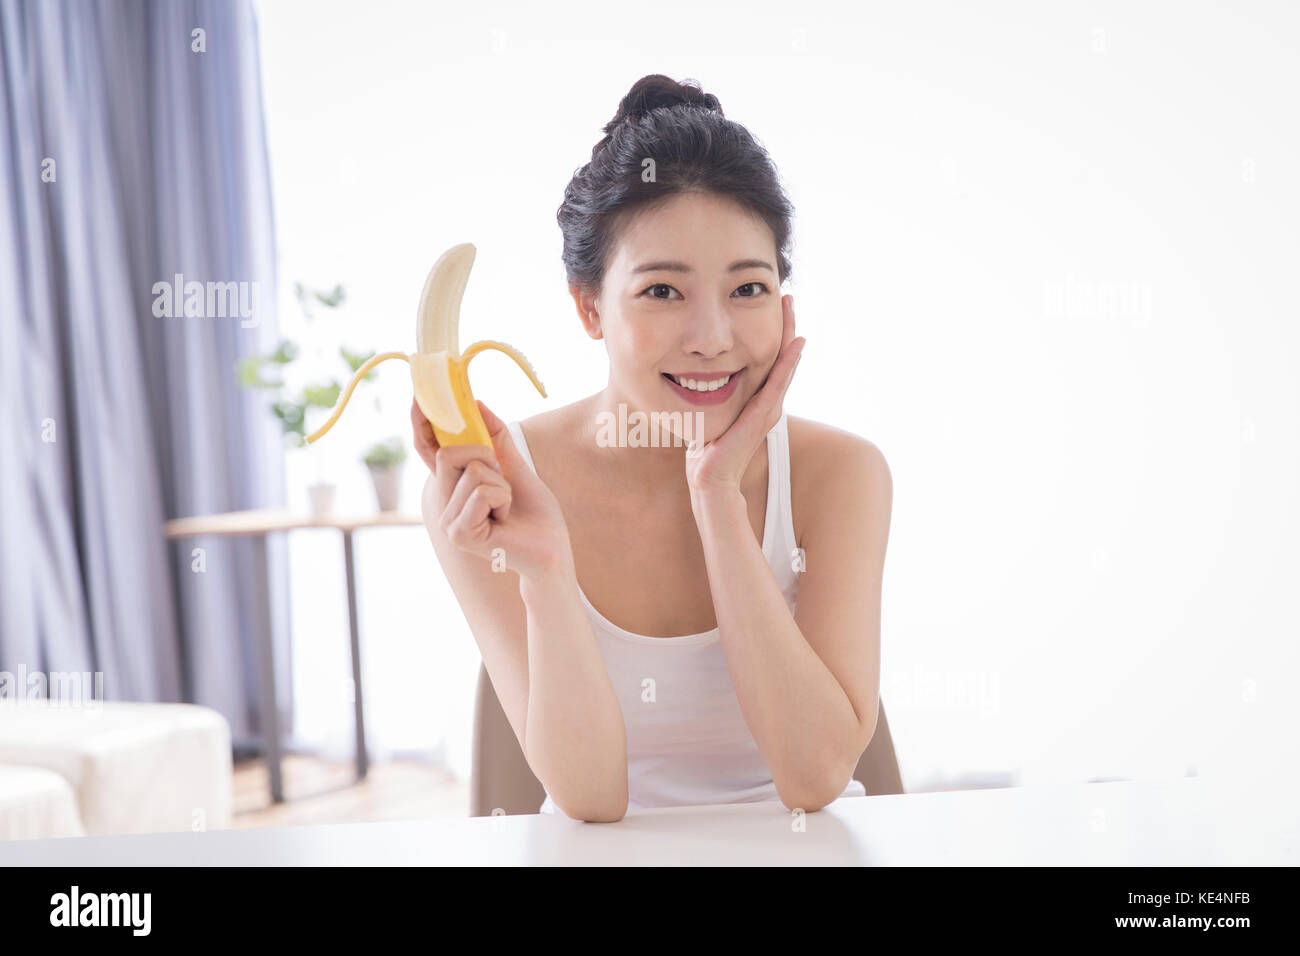 Portrait of young smiling slim woman eating banana Stock Photo